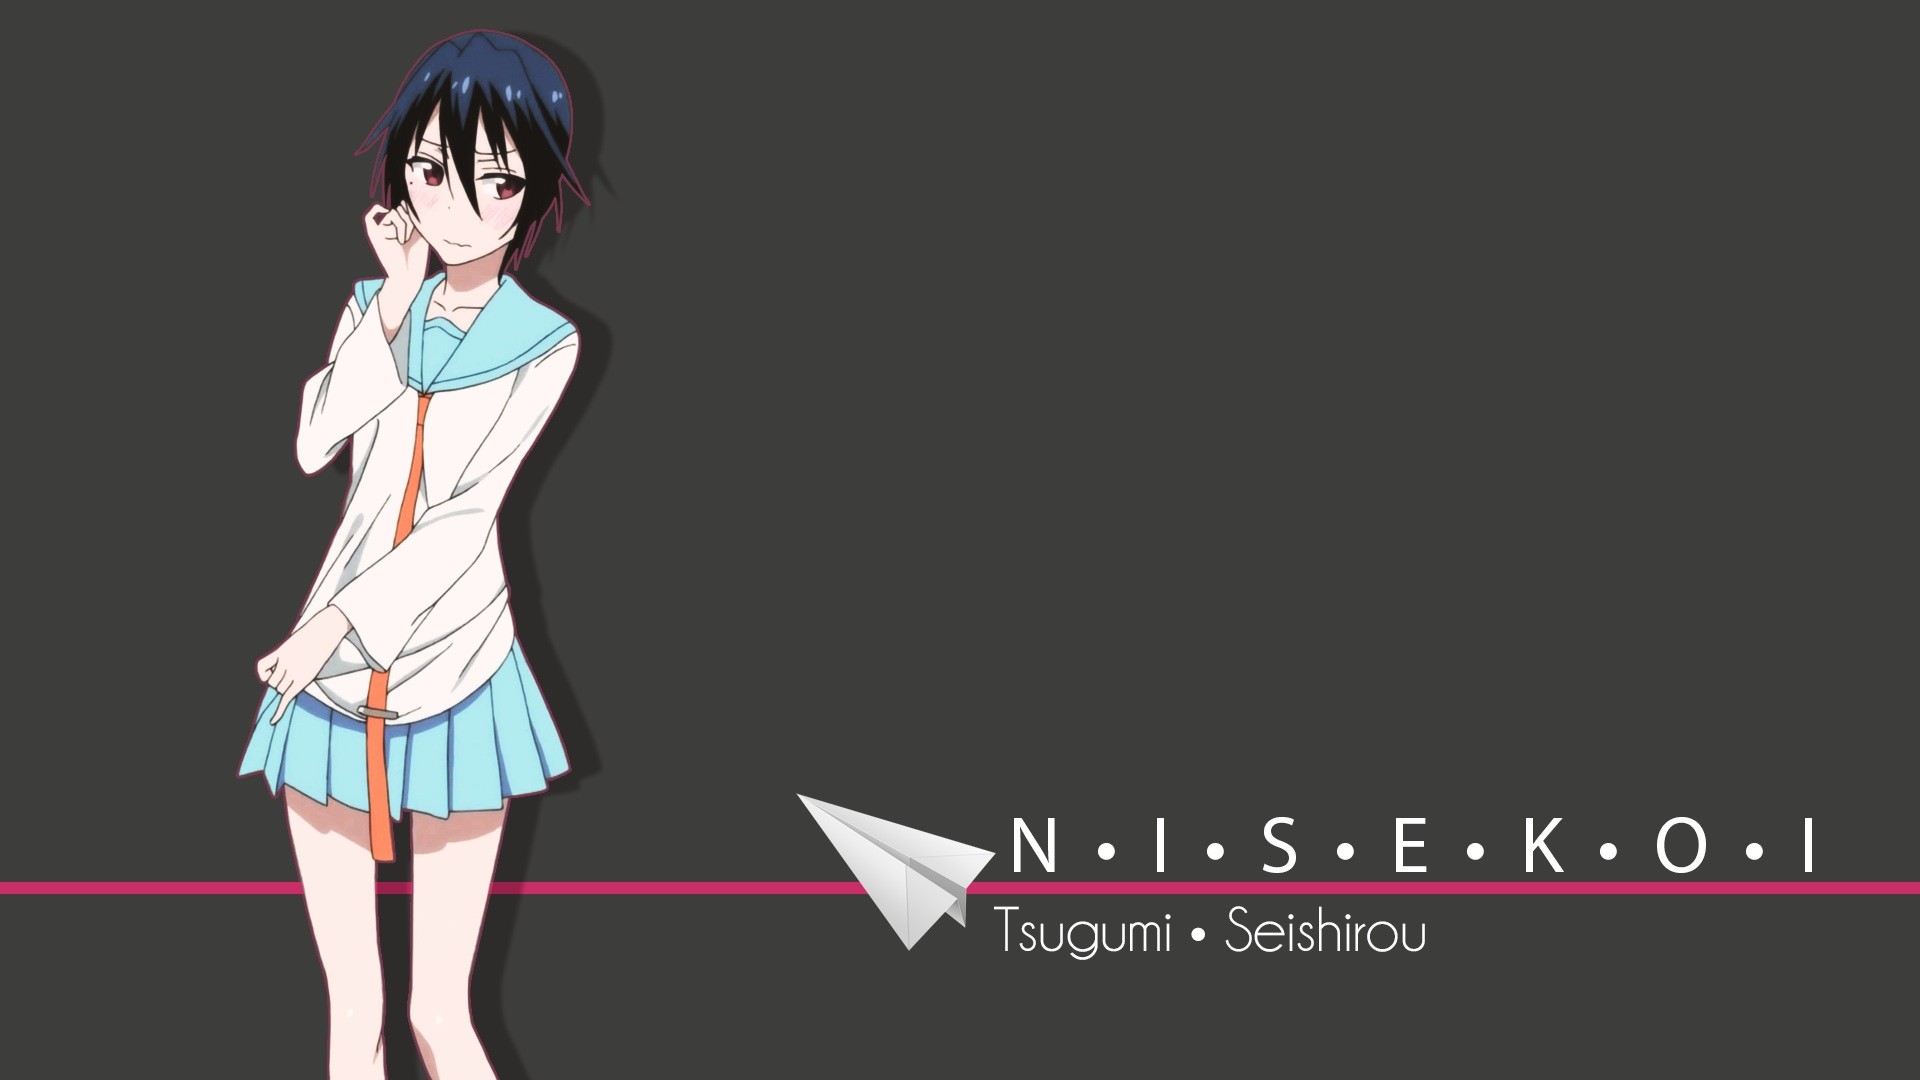 Anime 1920x1080 anime Nisekoi school uniform Tsugumi Seishirou paper planes red eyes miniskirt standing anime girls gray background simple background